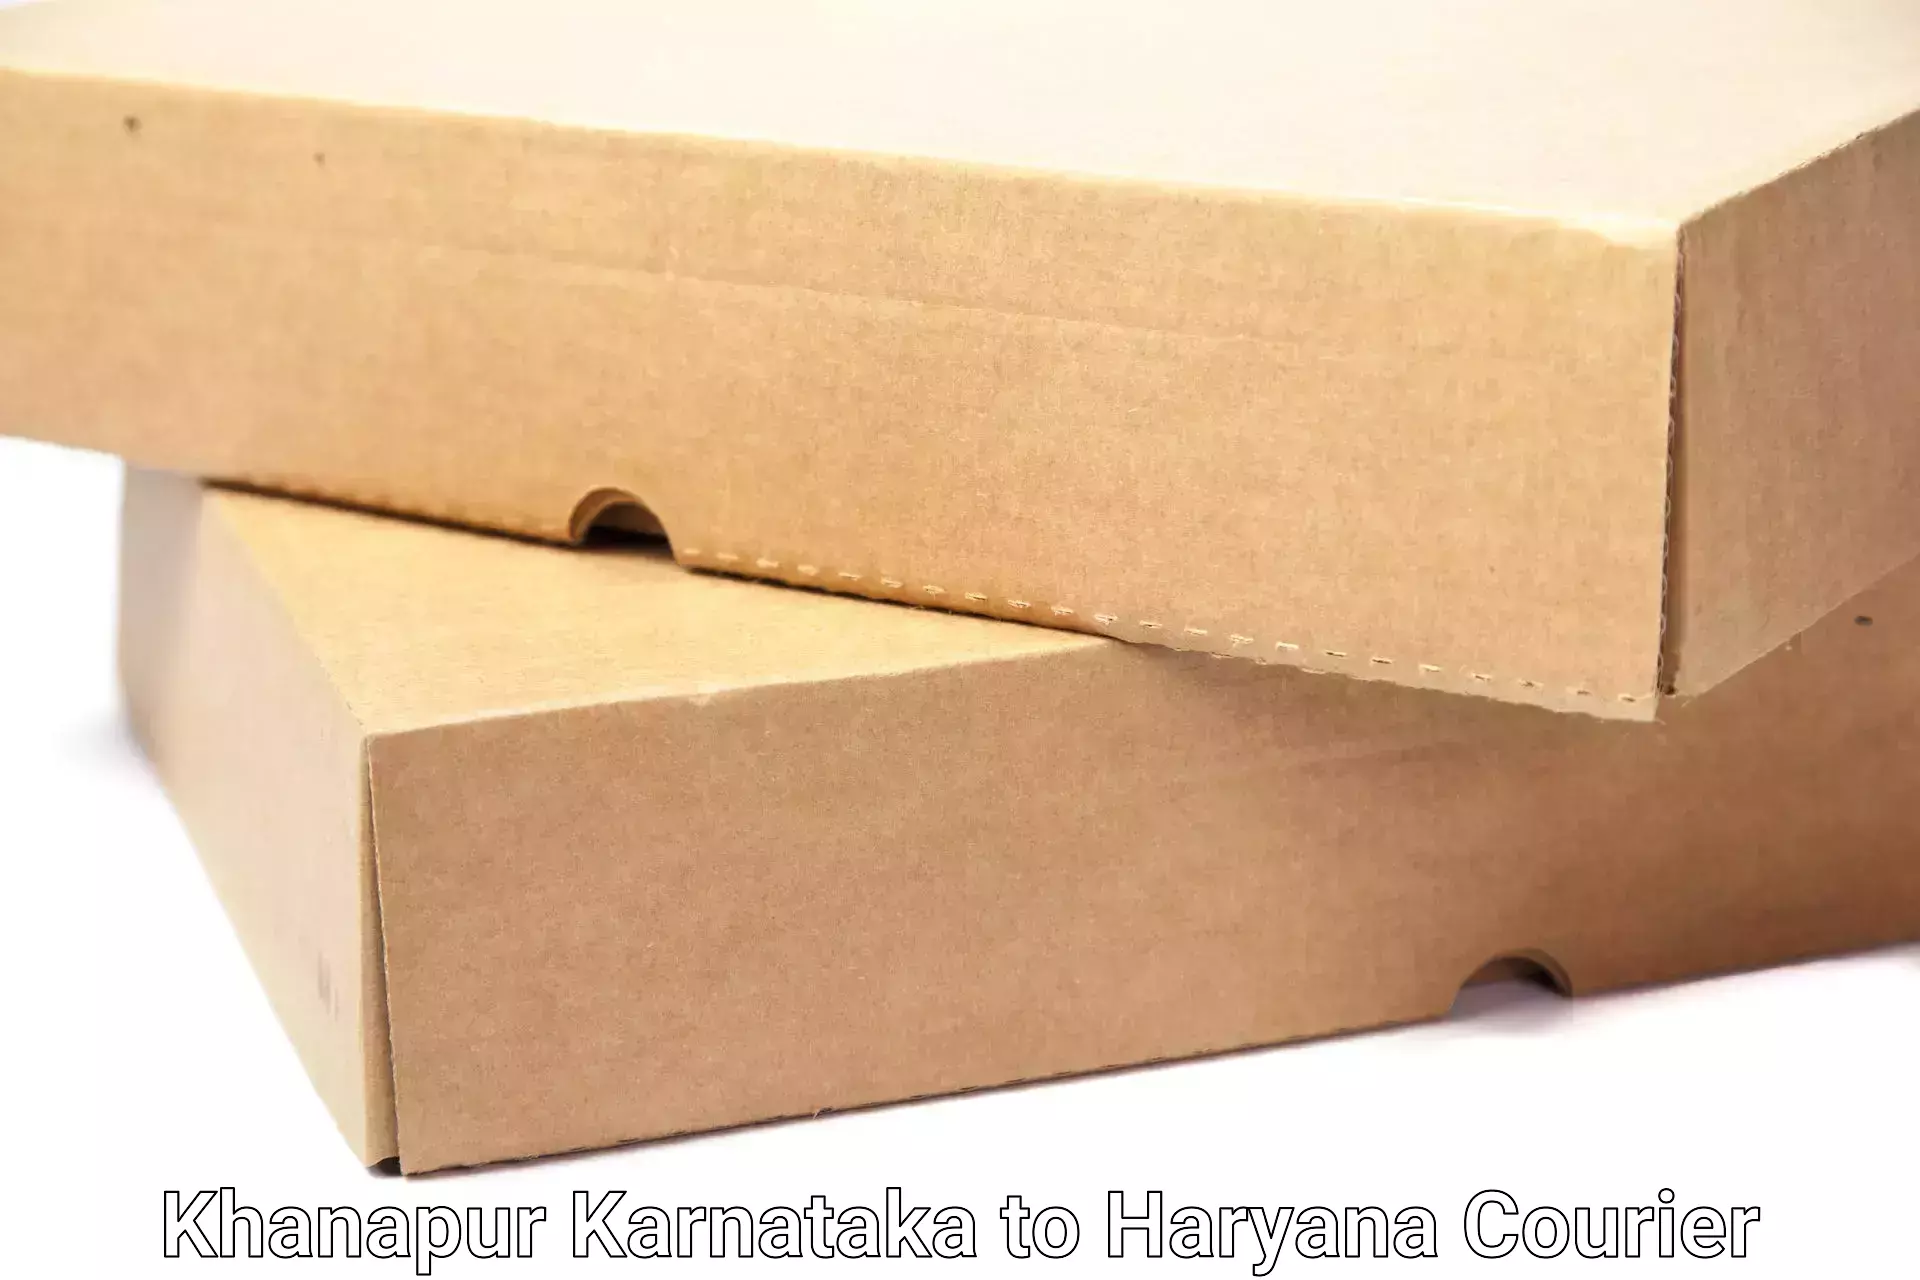 Home moving experts Khanapur Karnataka to Haryana